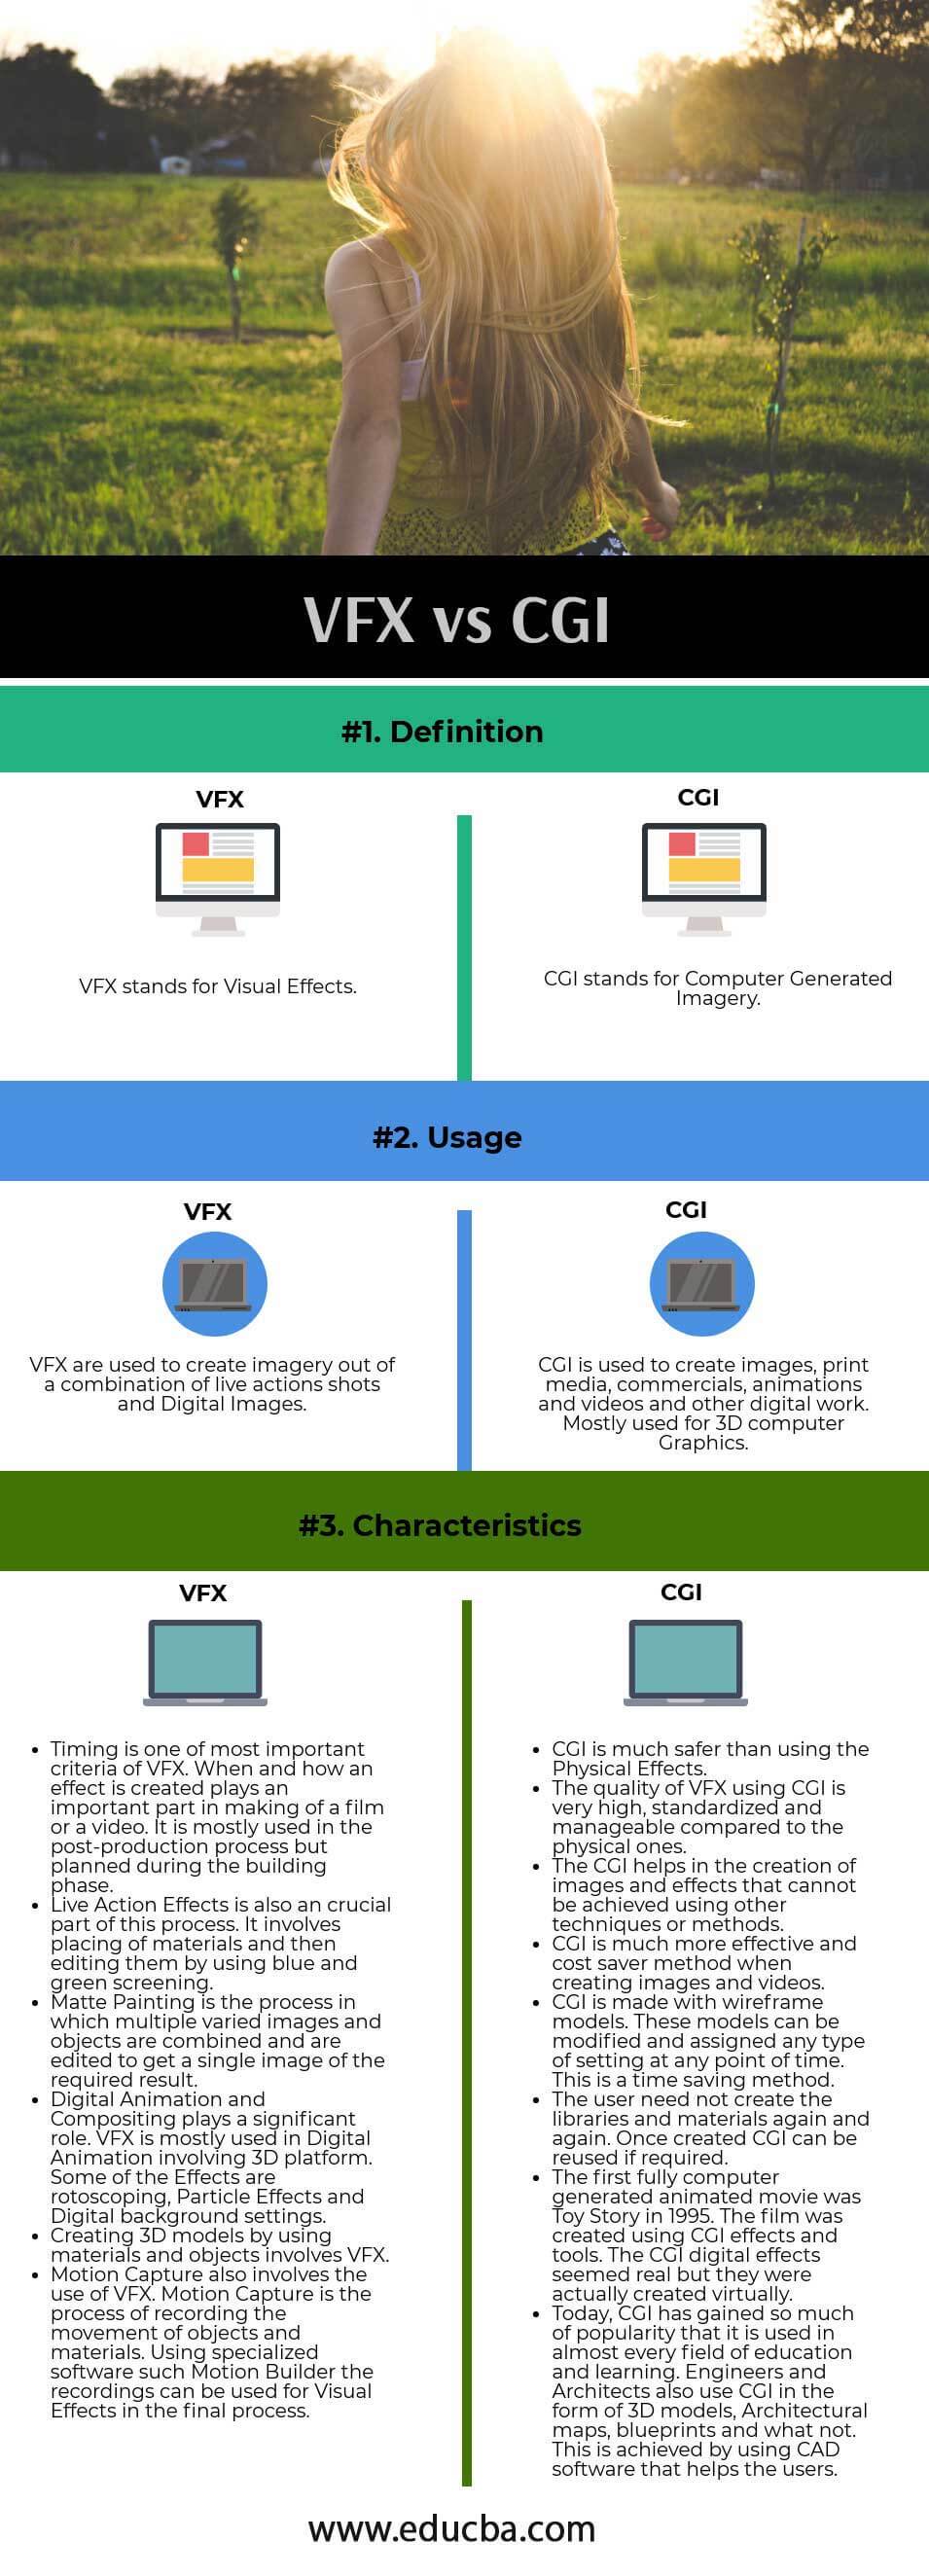 VFX VS CGI | Know The Top Differences Between VFX VS CGI